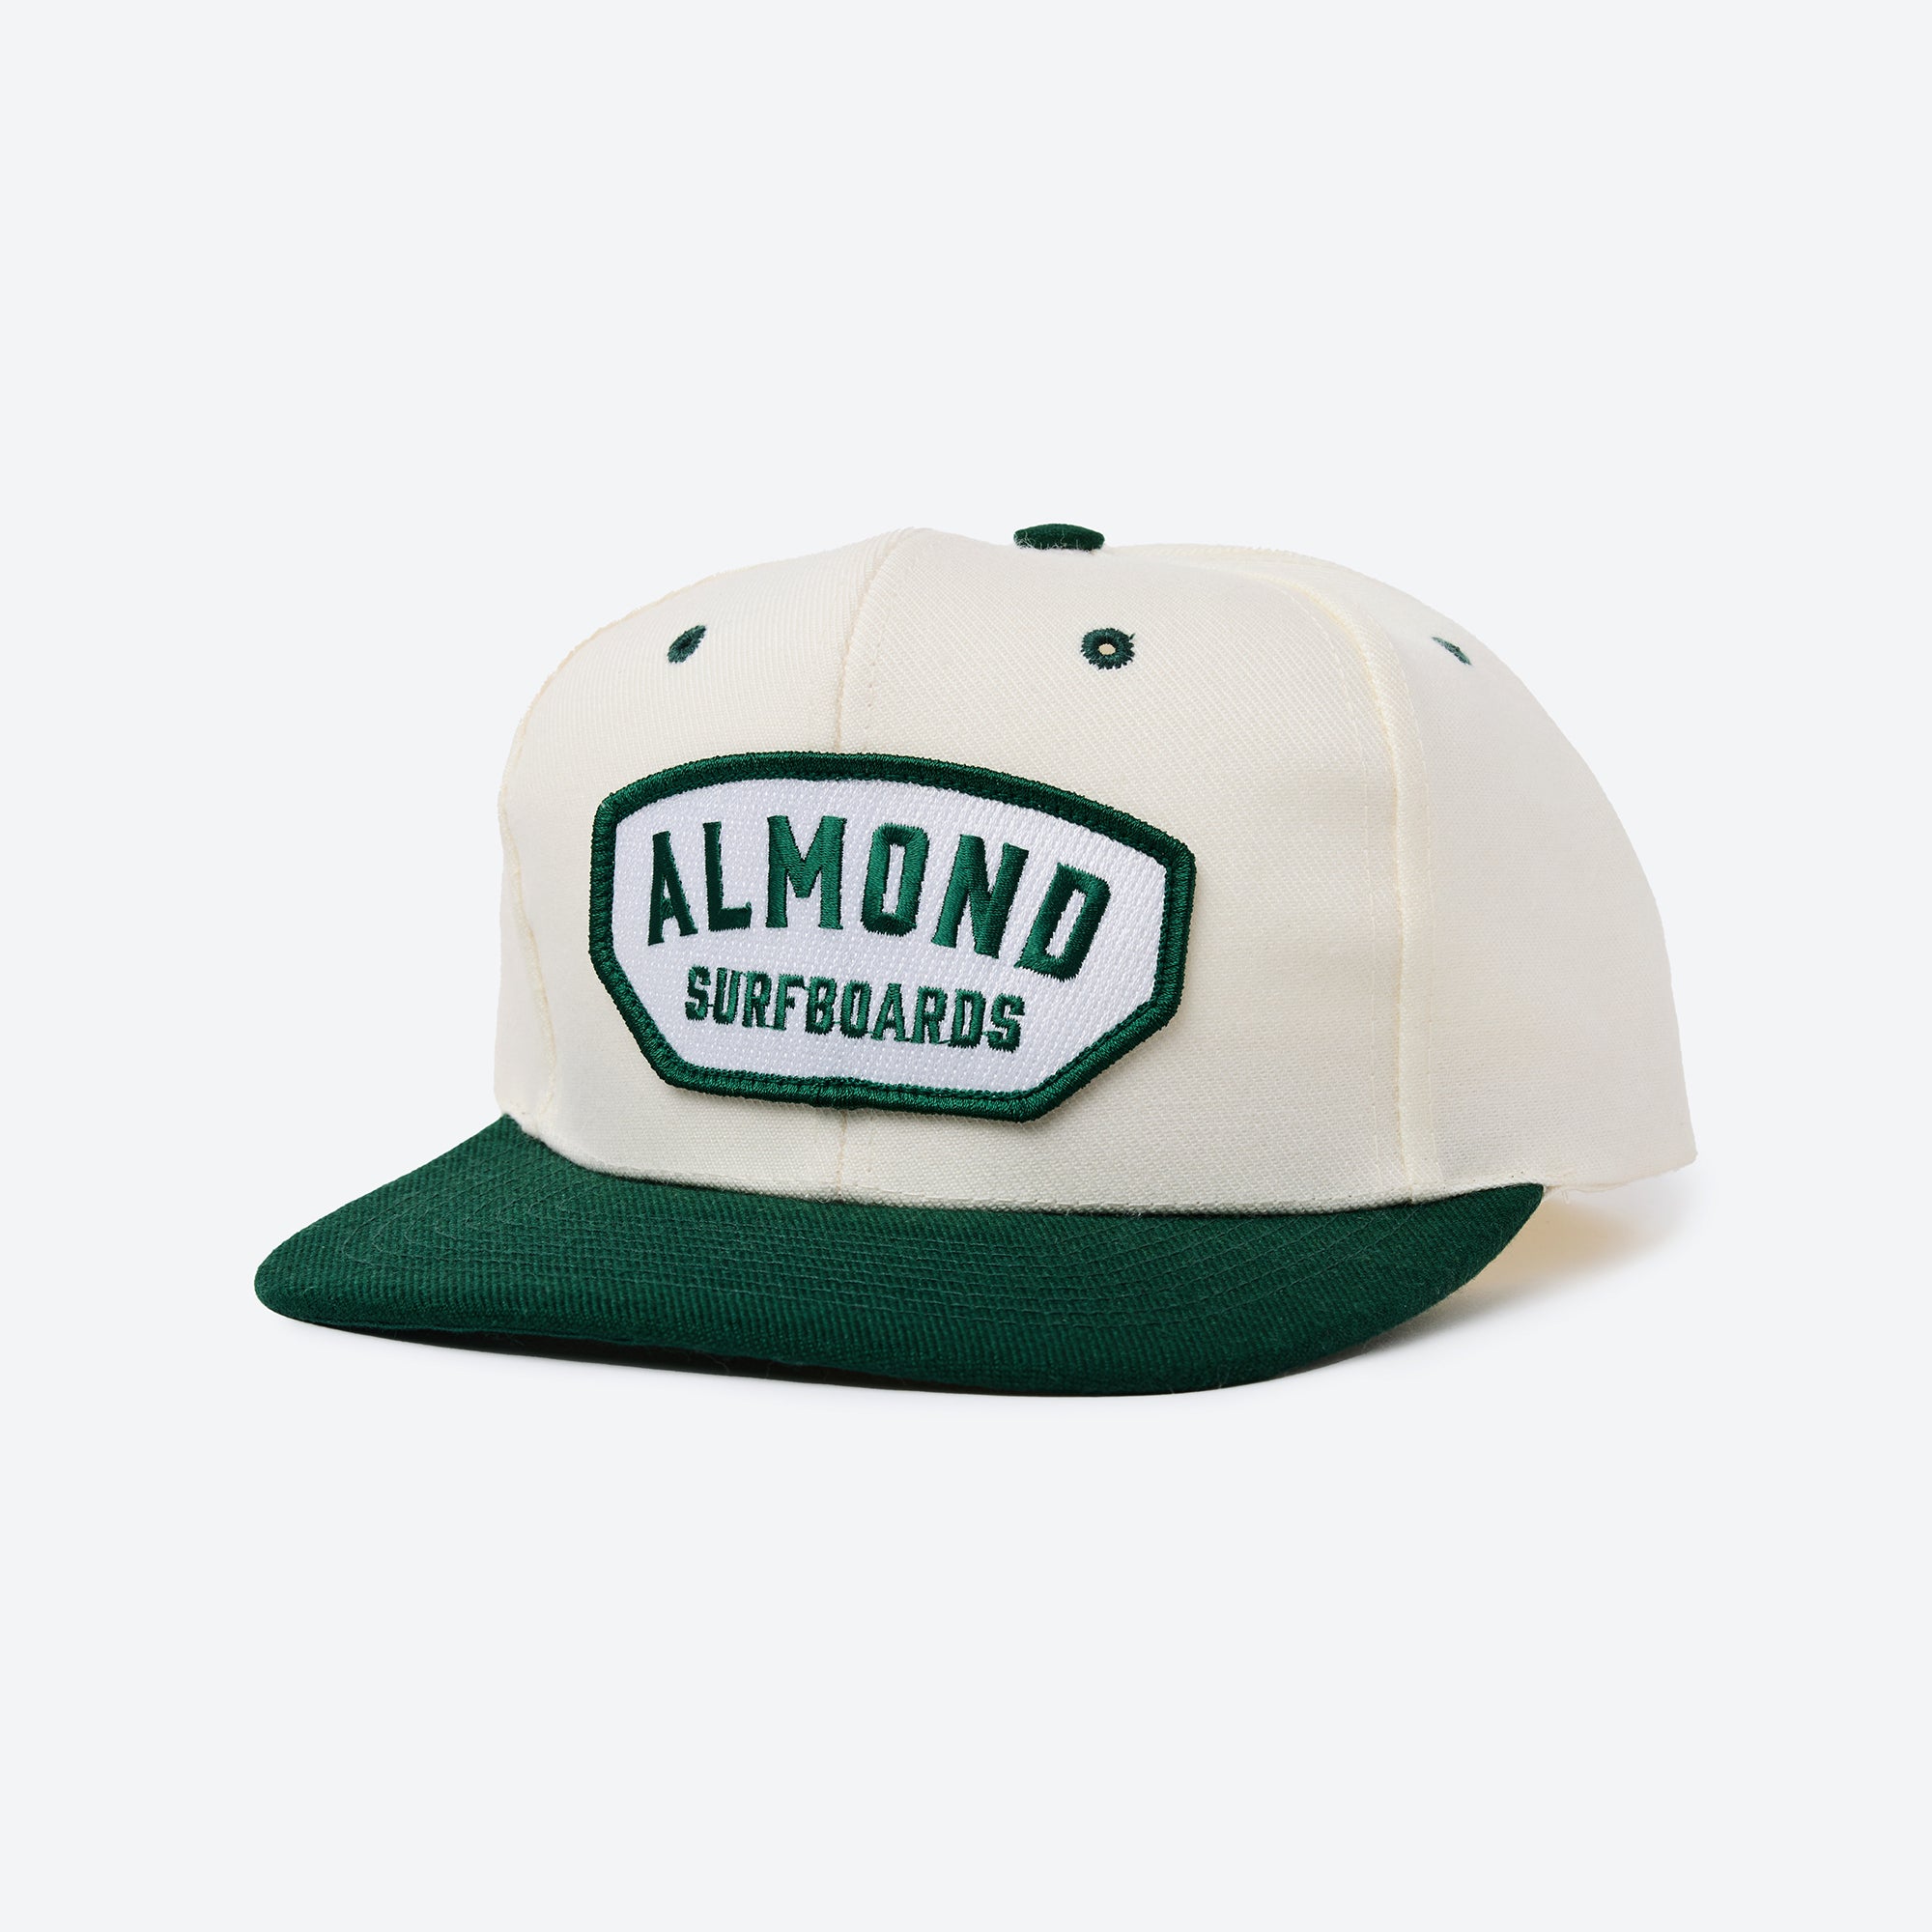 The Almond Ball Cap